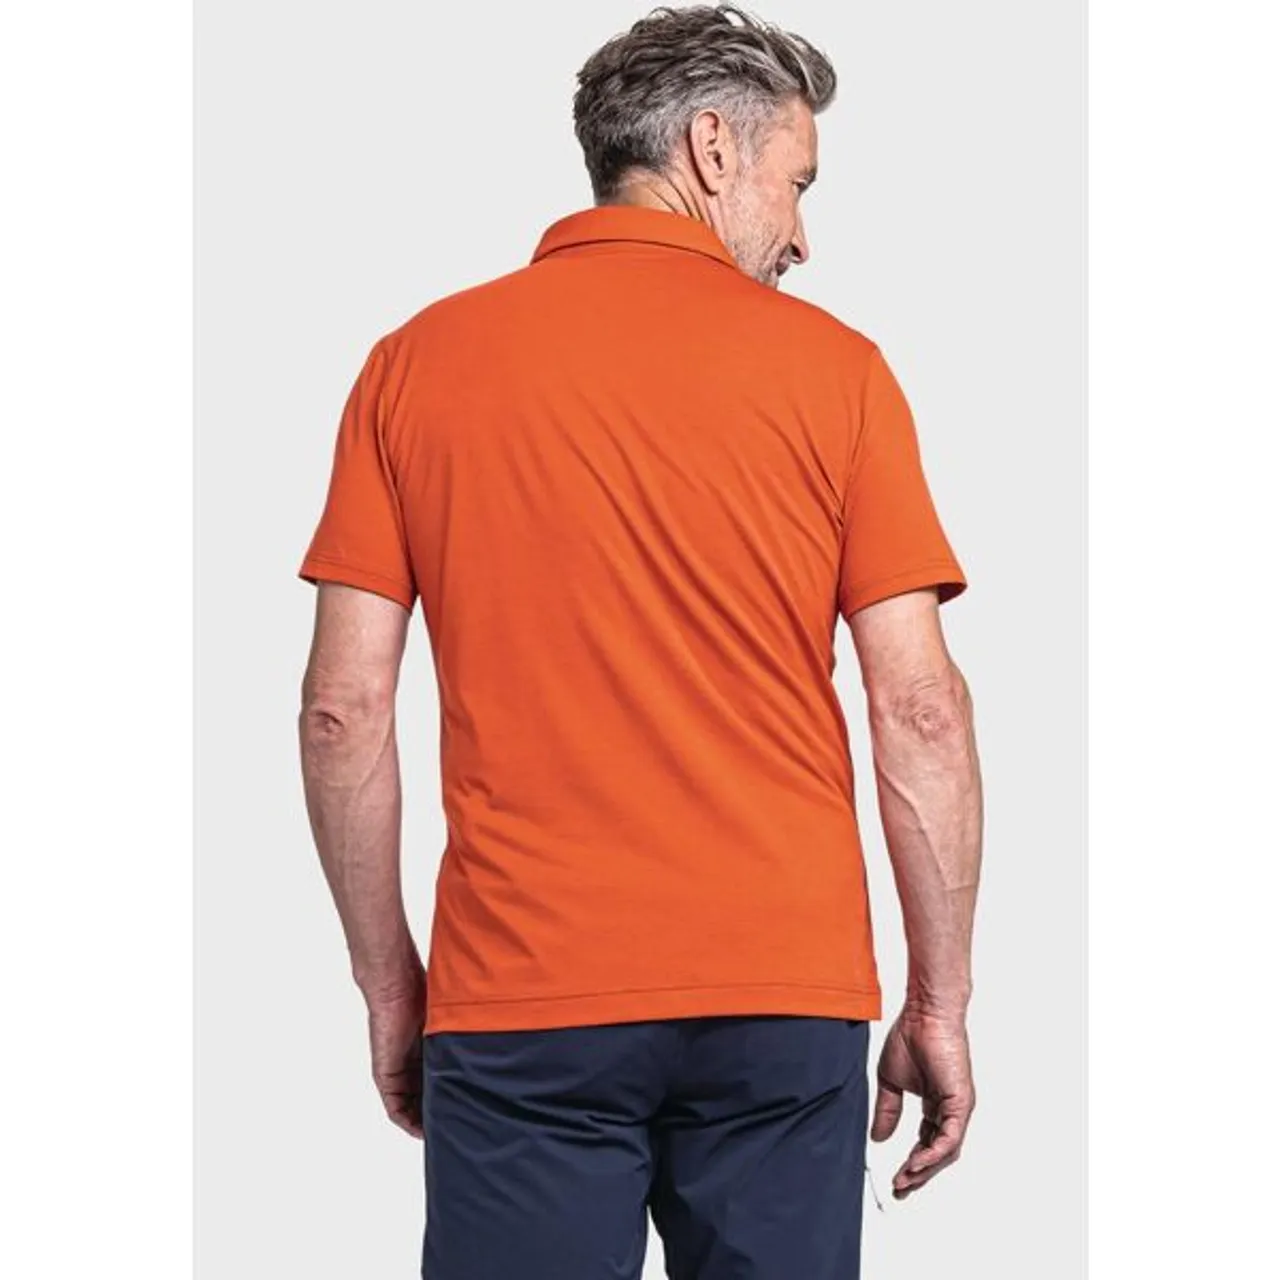 Poloshirt SCHÖFFEL "CIRC Polo Shirt Tauron M" Gr. 52, orange (5480, orange) Herren Shirts Kurzarm